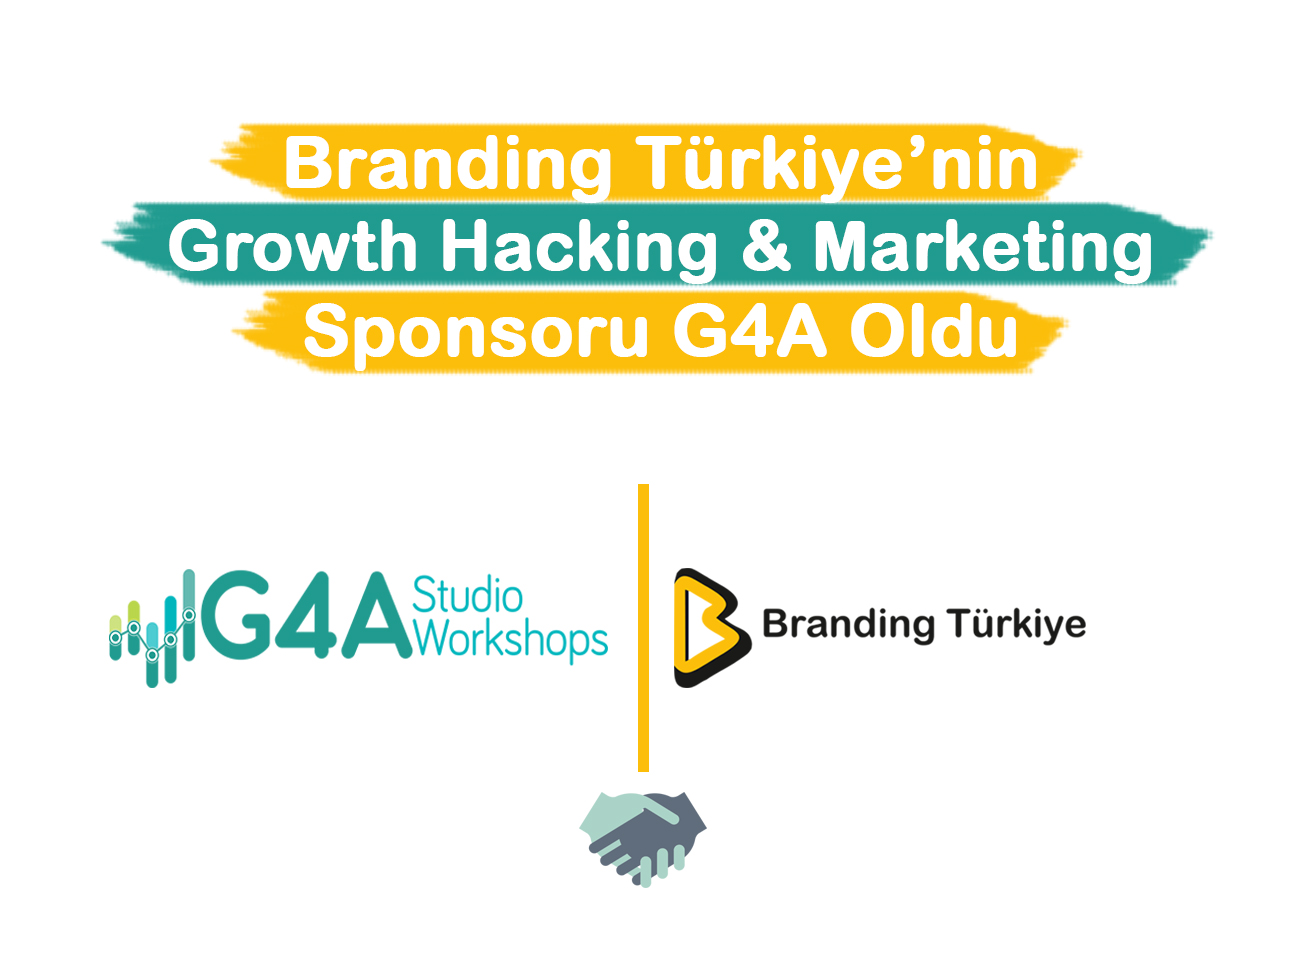 Branding Türkiye nin Growth Hacking & Marketing Sponsoru G4A Studio